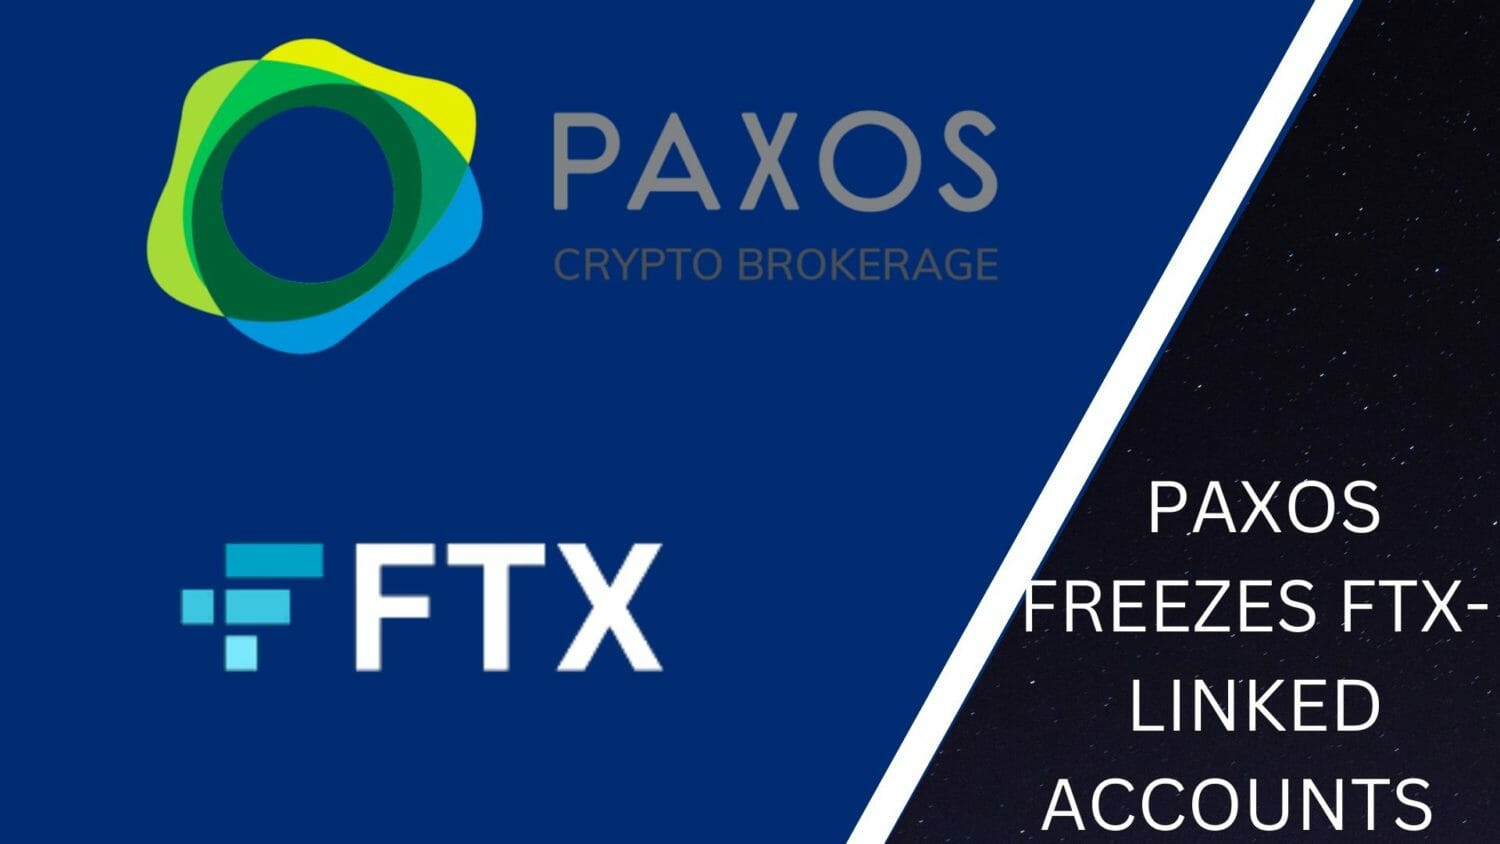 Paxos Freezes Ftx-Linked Accounts 